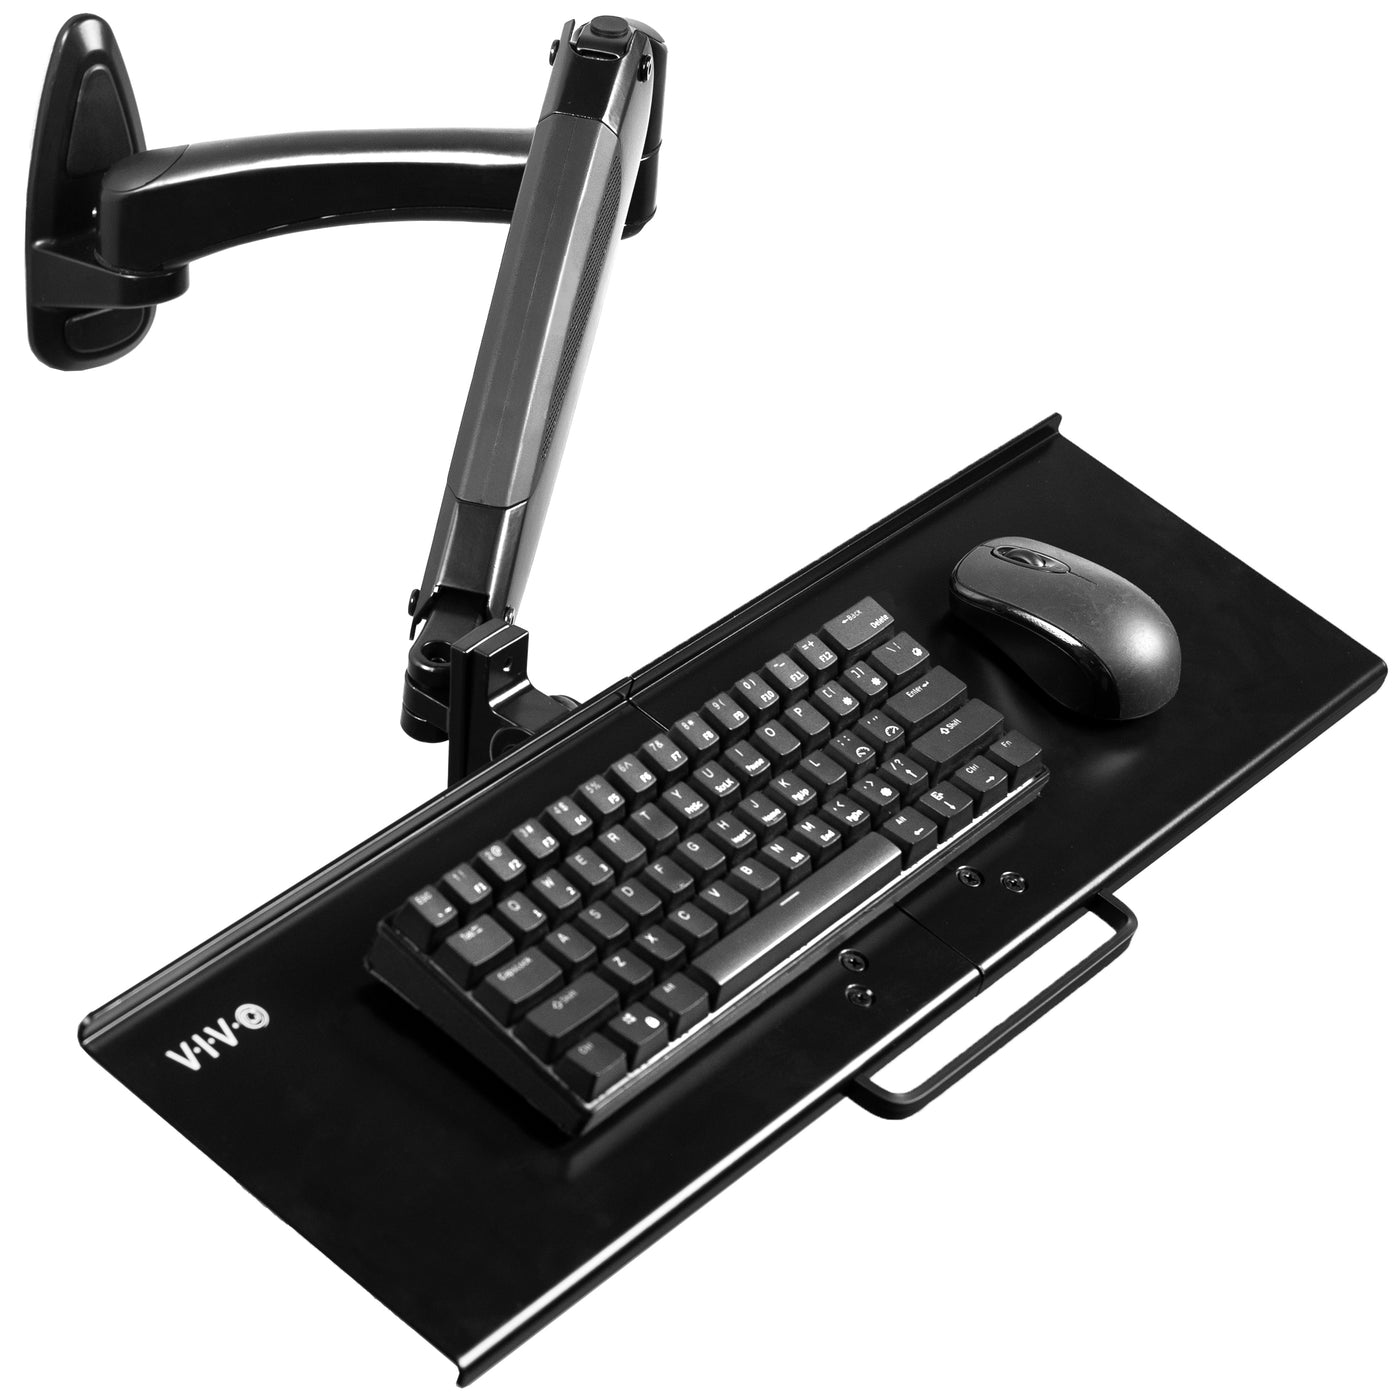 Sturdy steel pneumatic height adjustable keyboard tray wall mount.